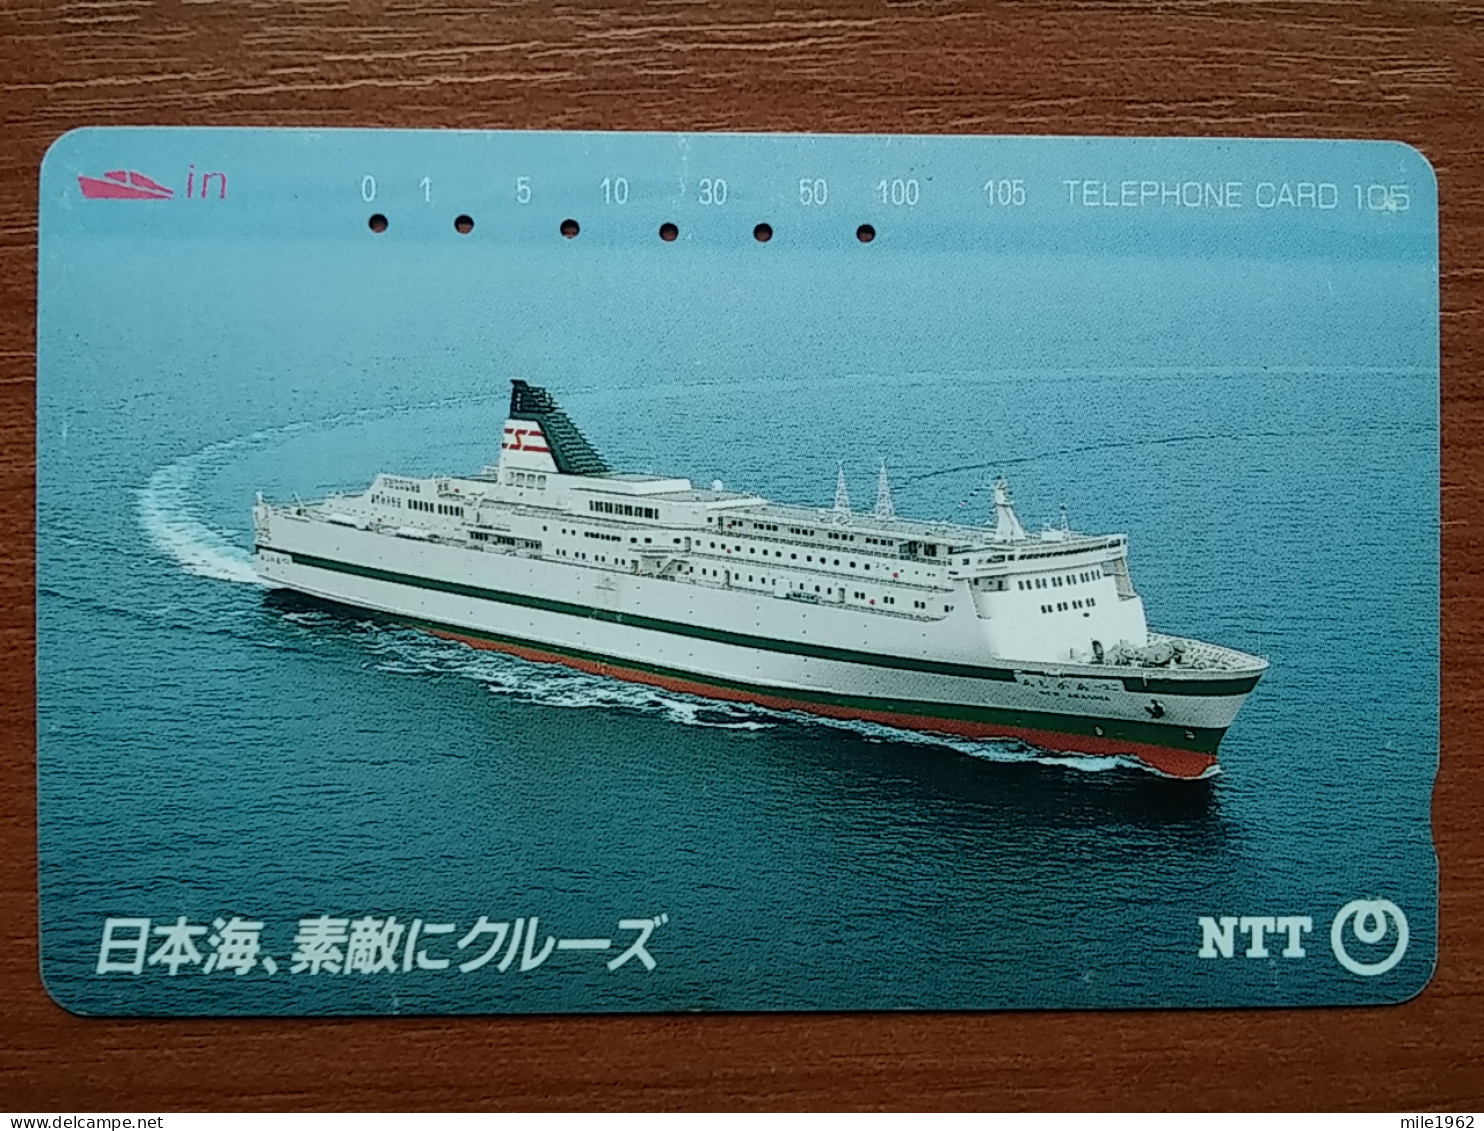 T-357 - JAPAN, Japon, Nipon, TELECARD, PHONECARD,  NTT 330-302, Ship, Navire - Bateaux